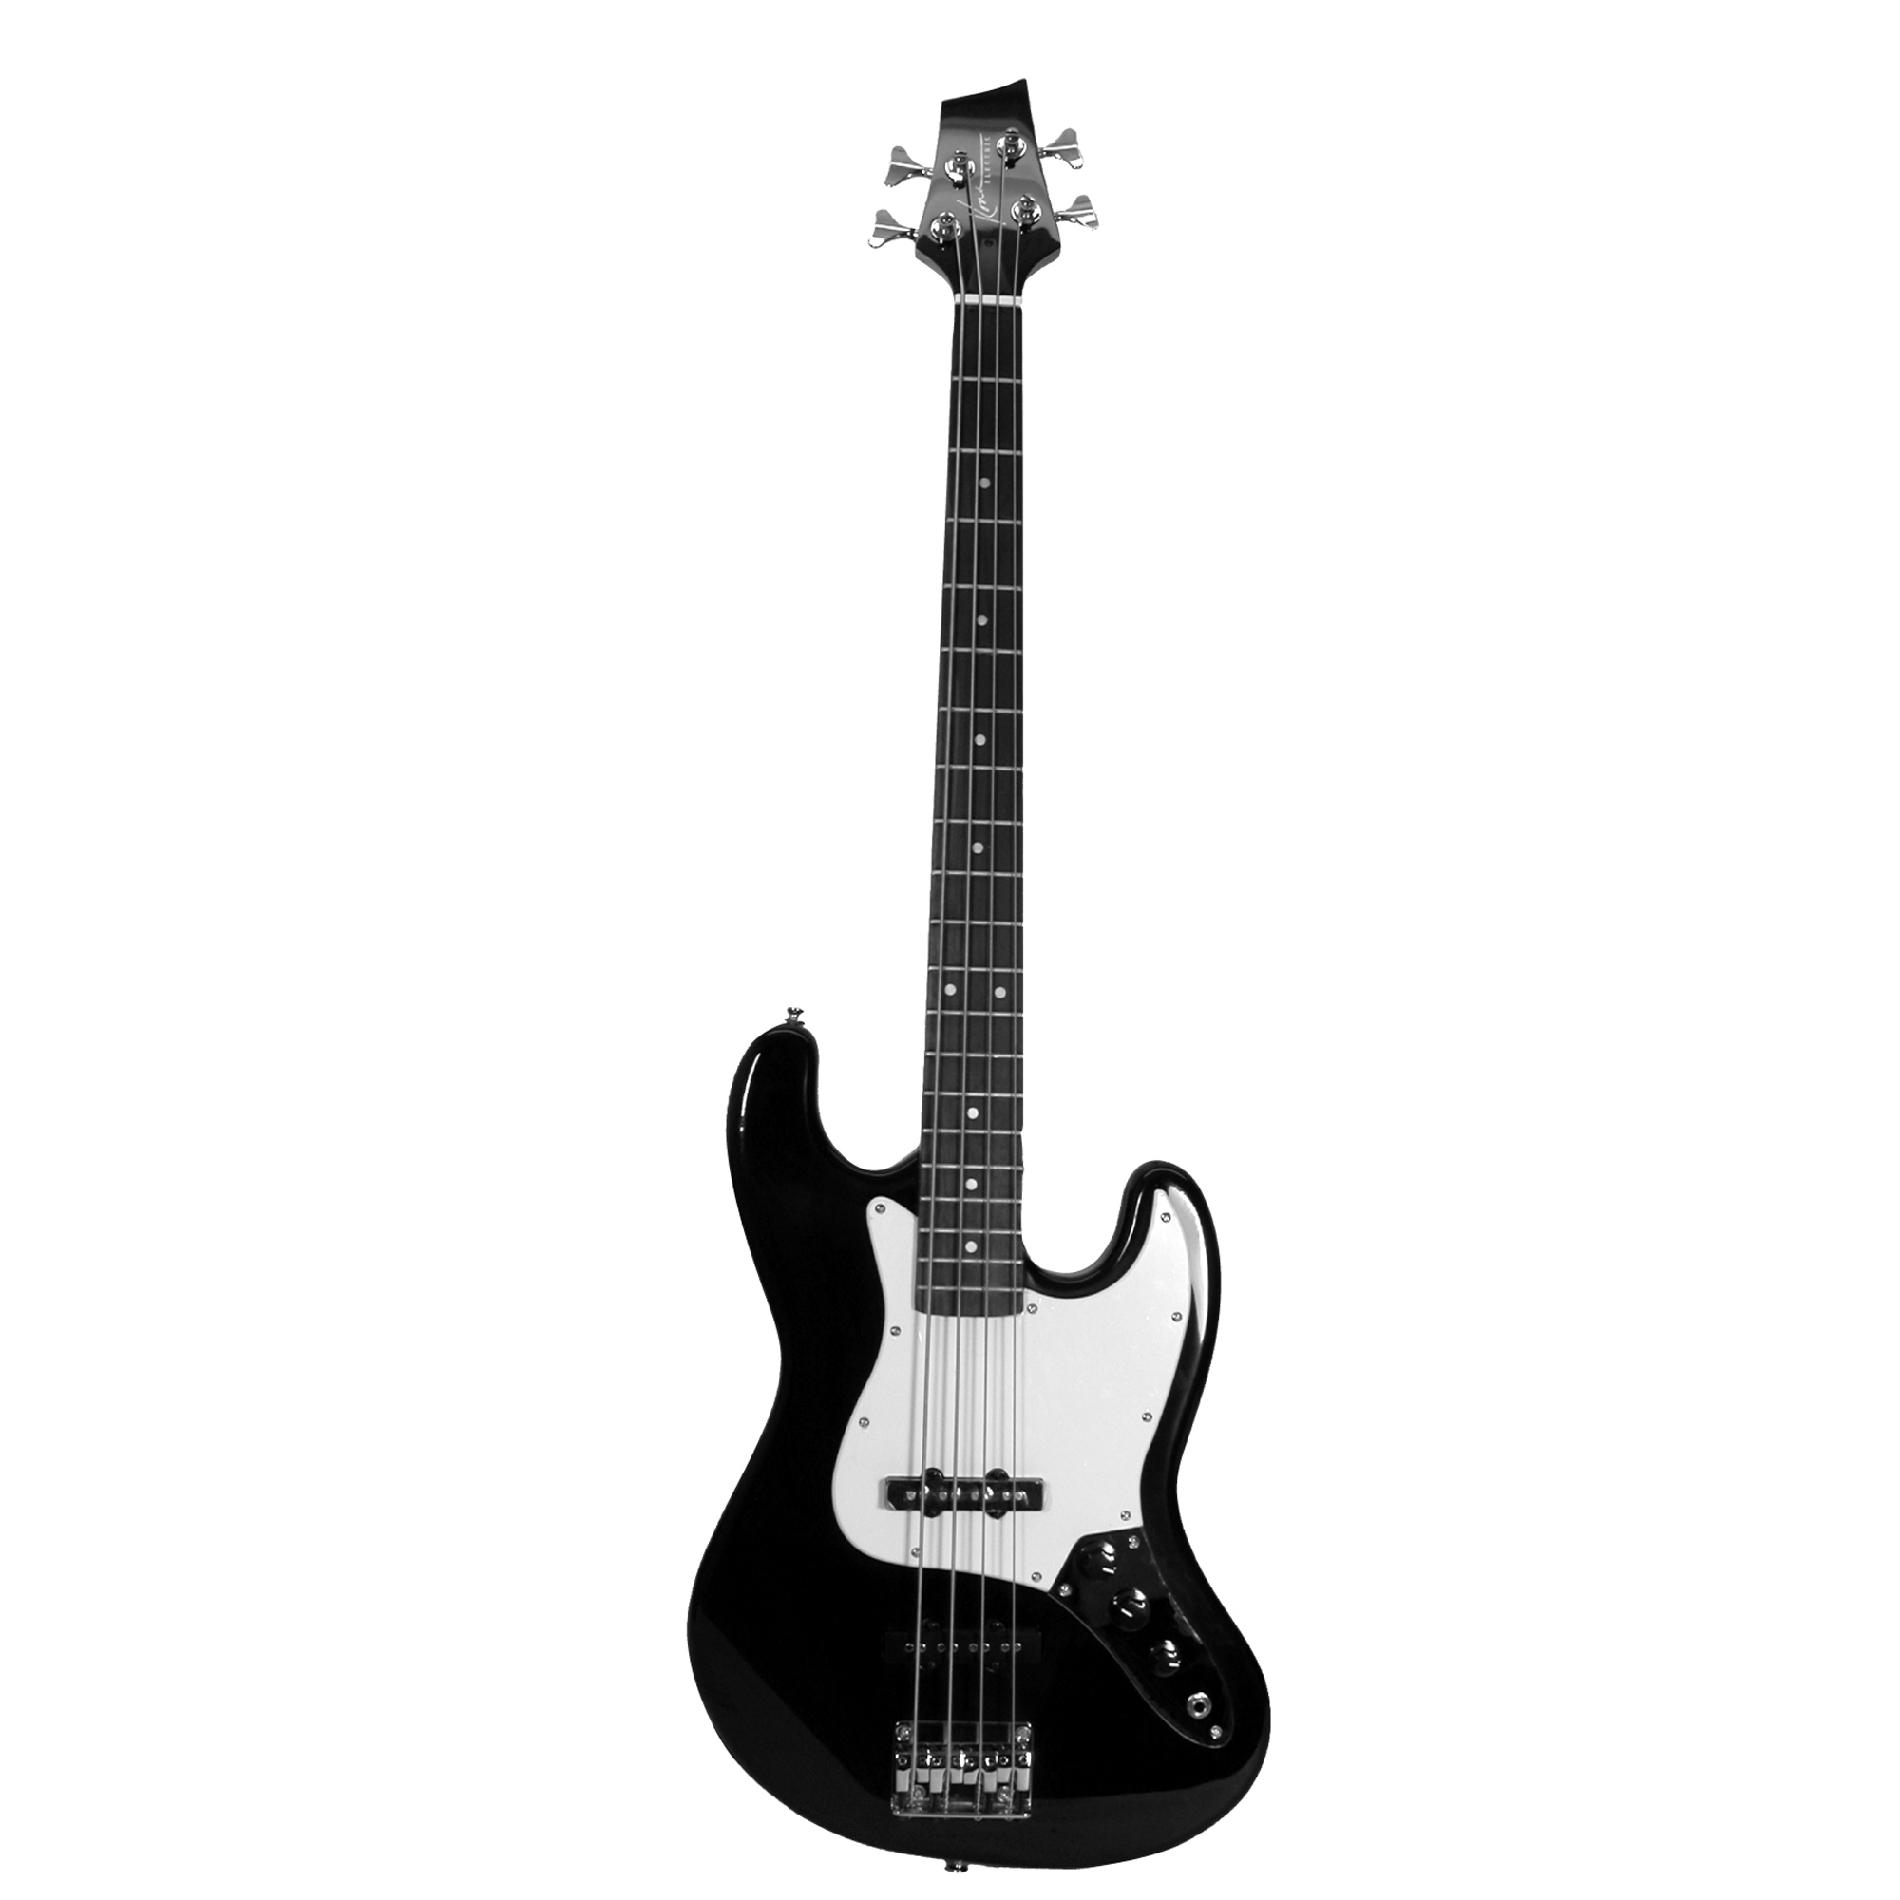 Kona Jazz Bass Style Guitar in Solid Black